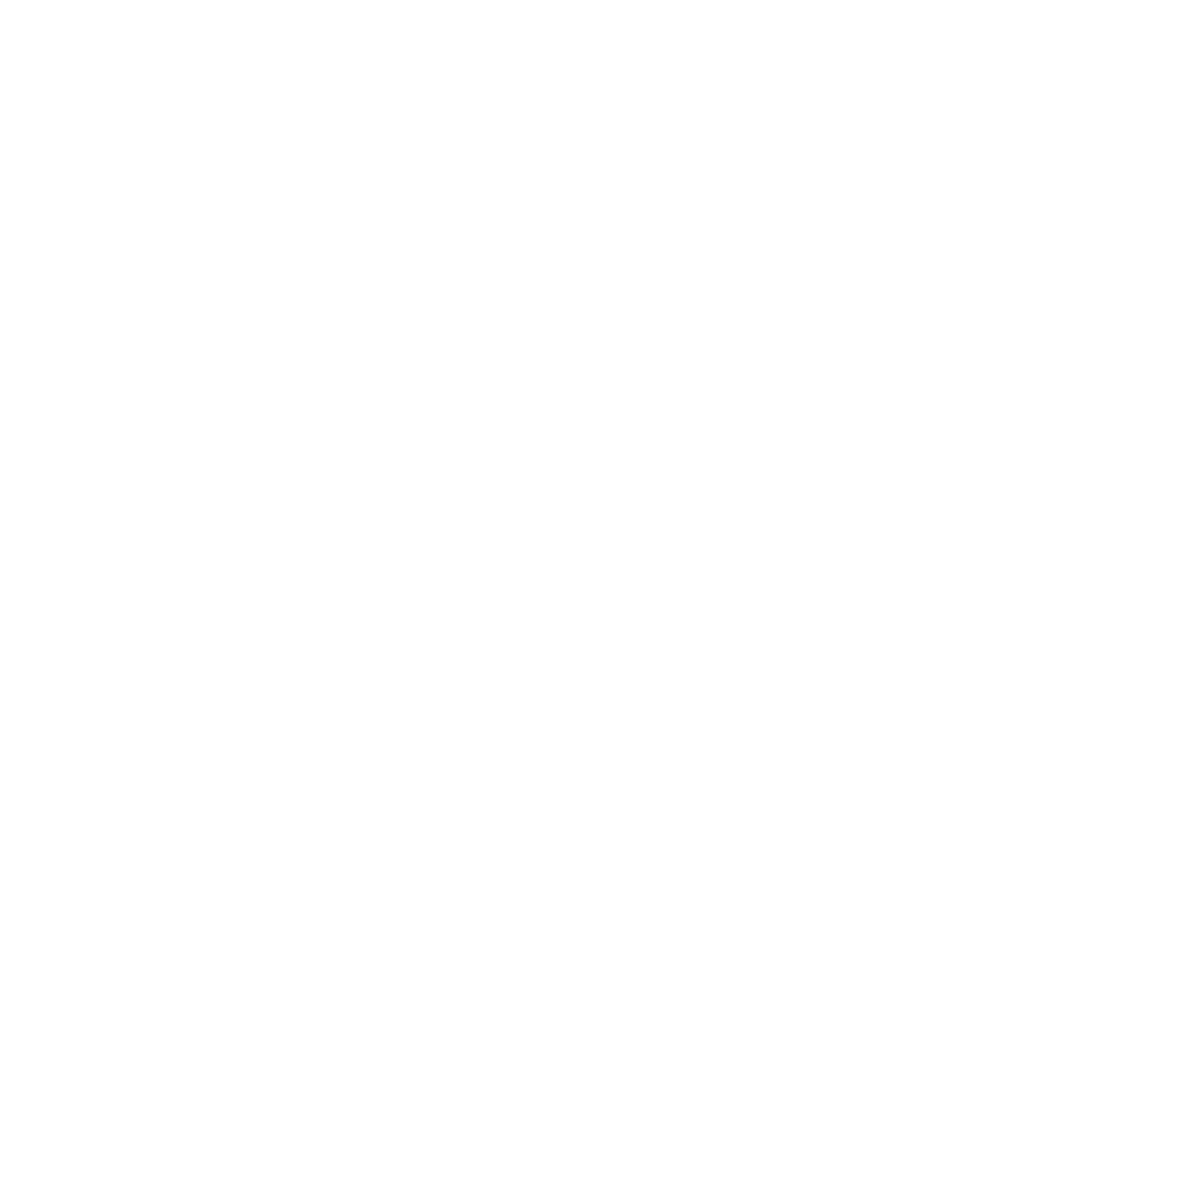 HK Import